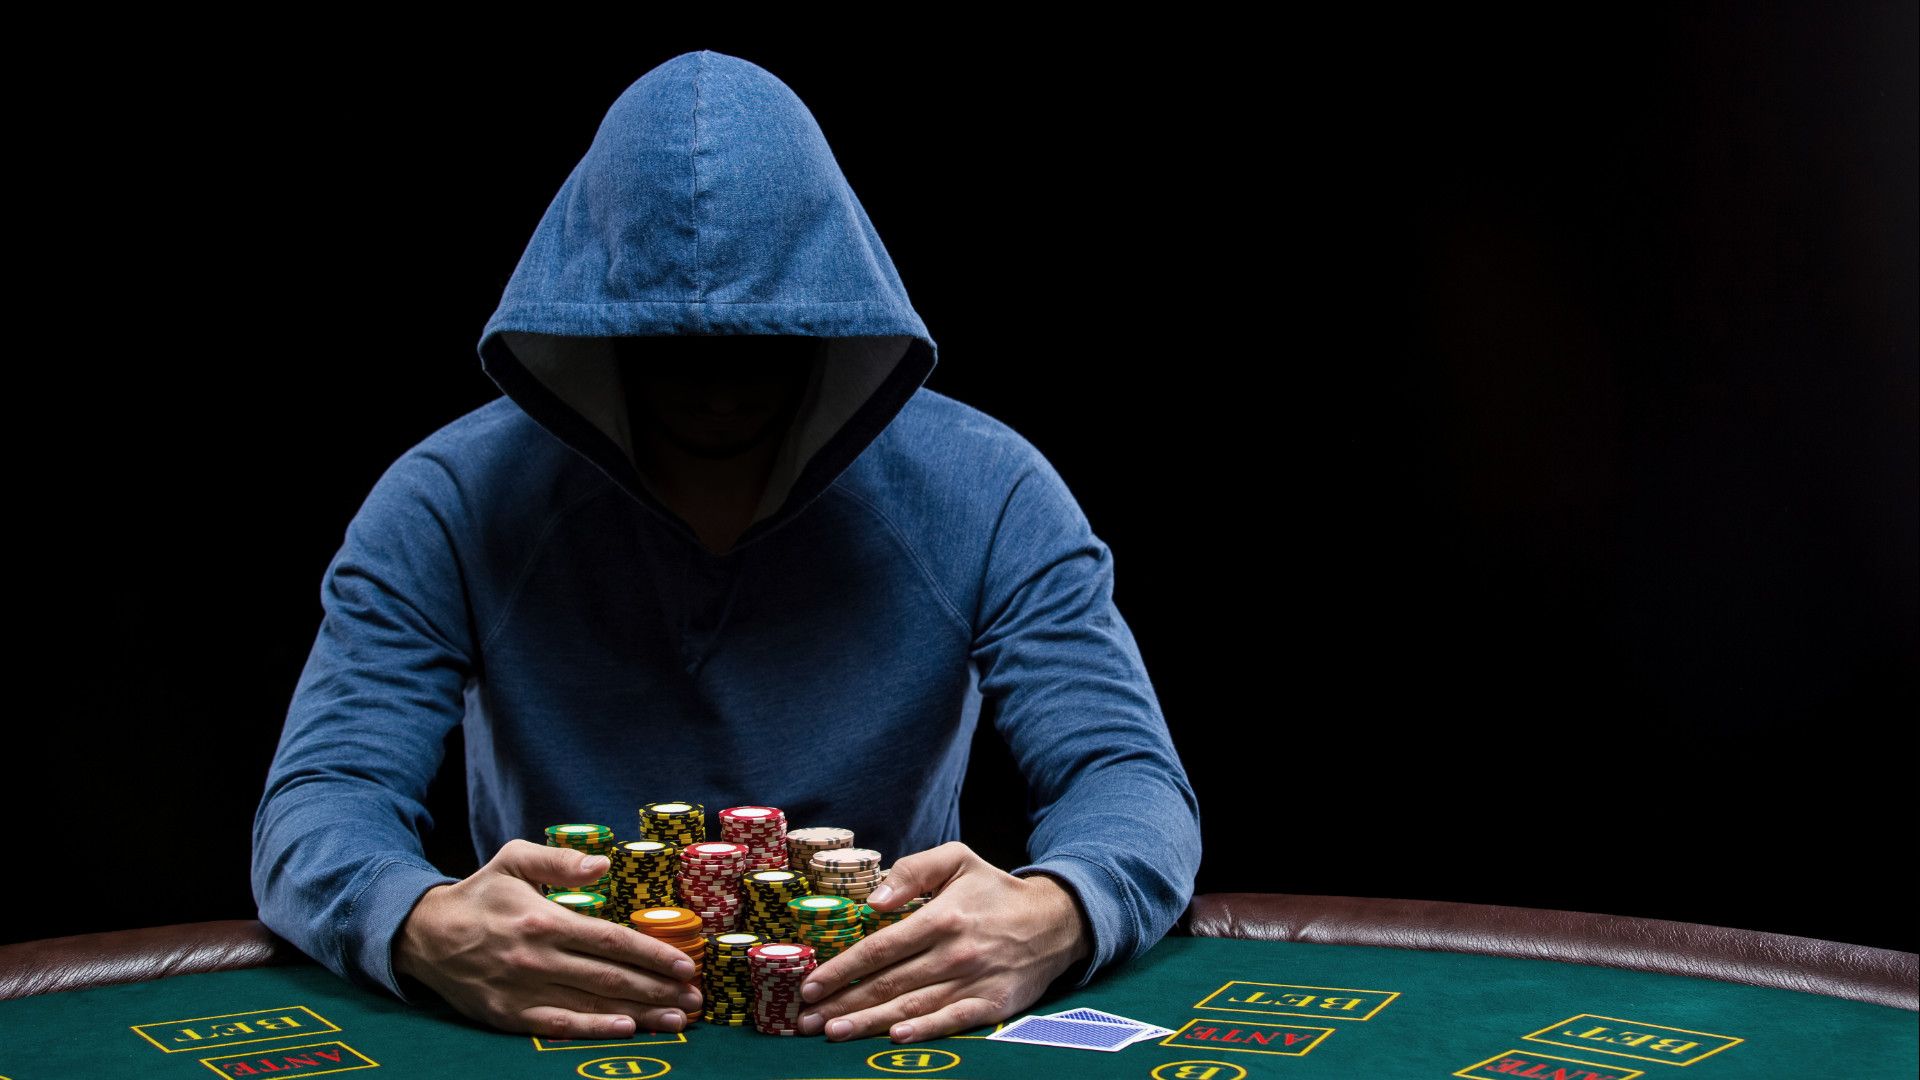 Full(er) House: Exposing high-end poker cheating devices